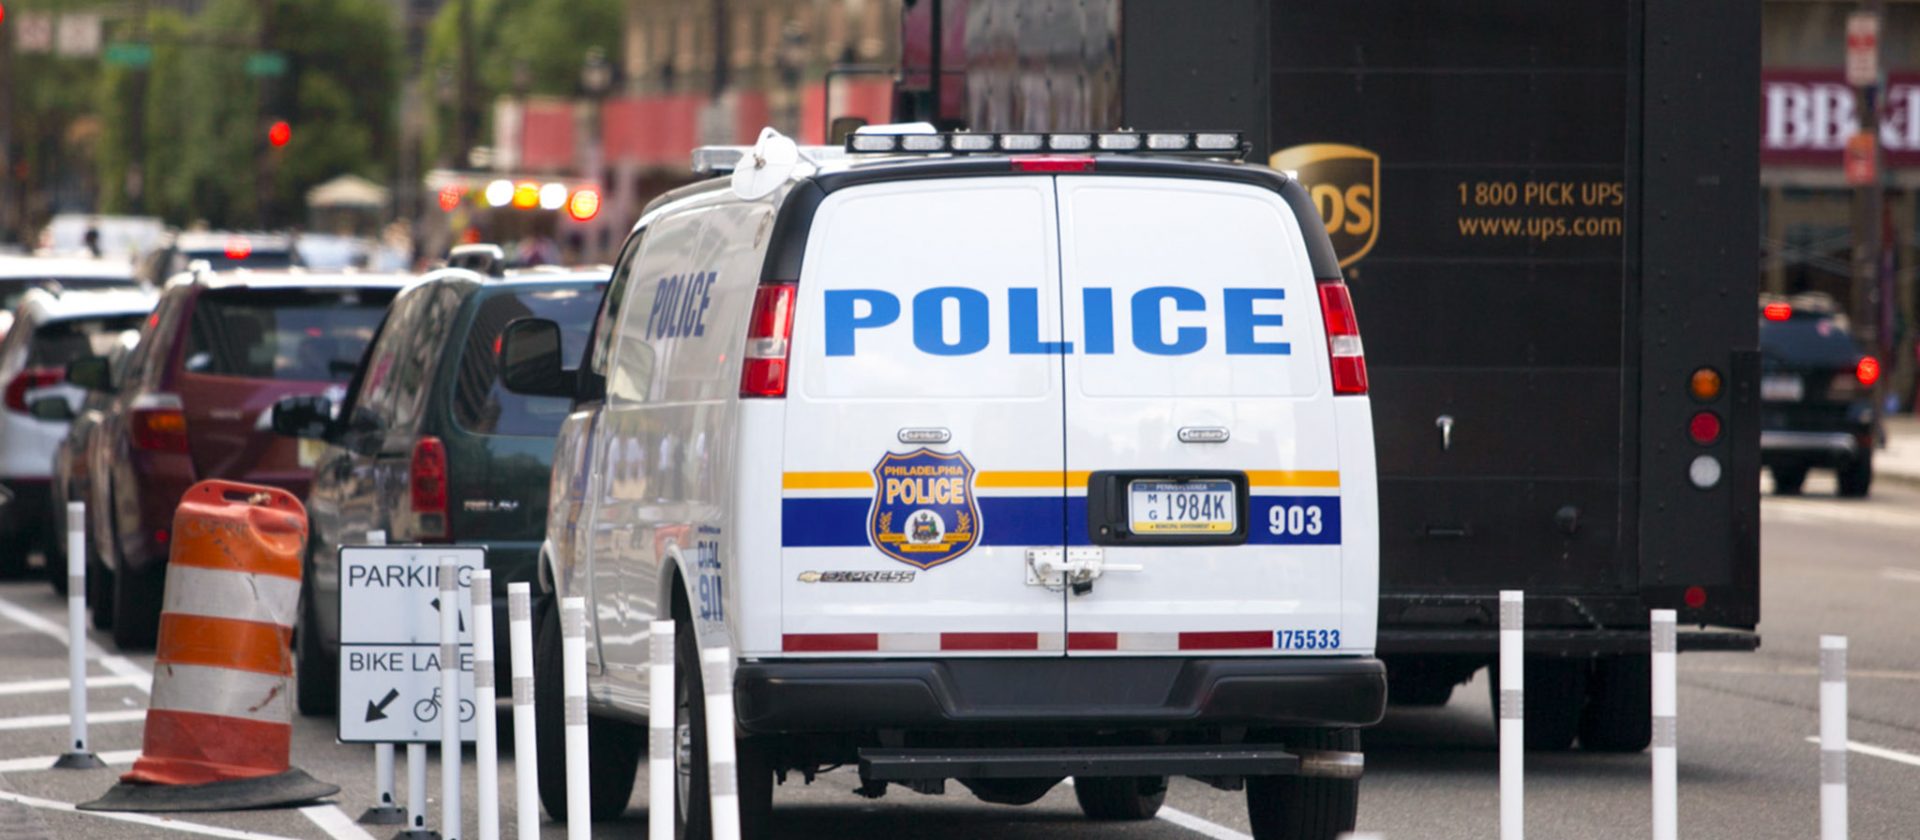 A Philadelphia Police van is seen on the street.